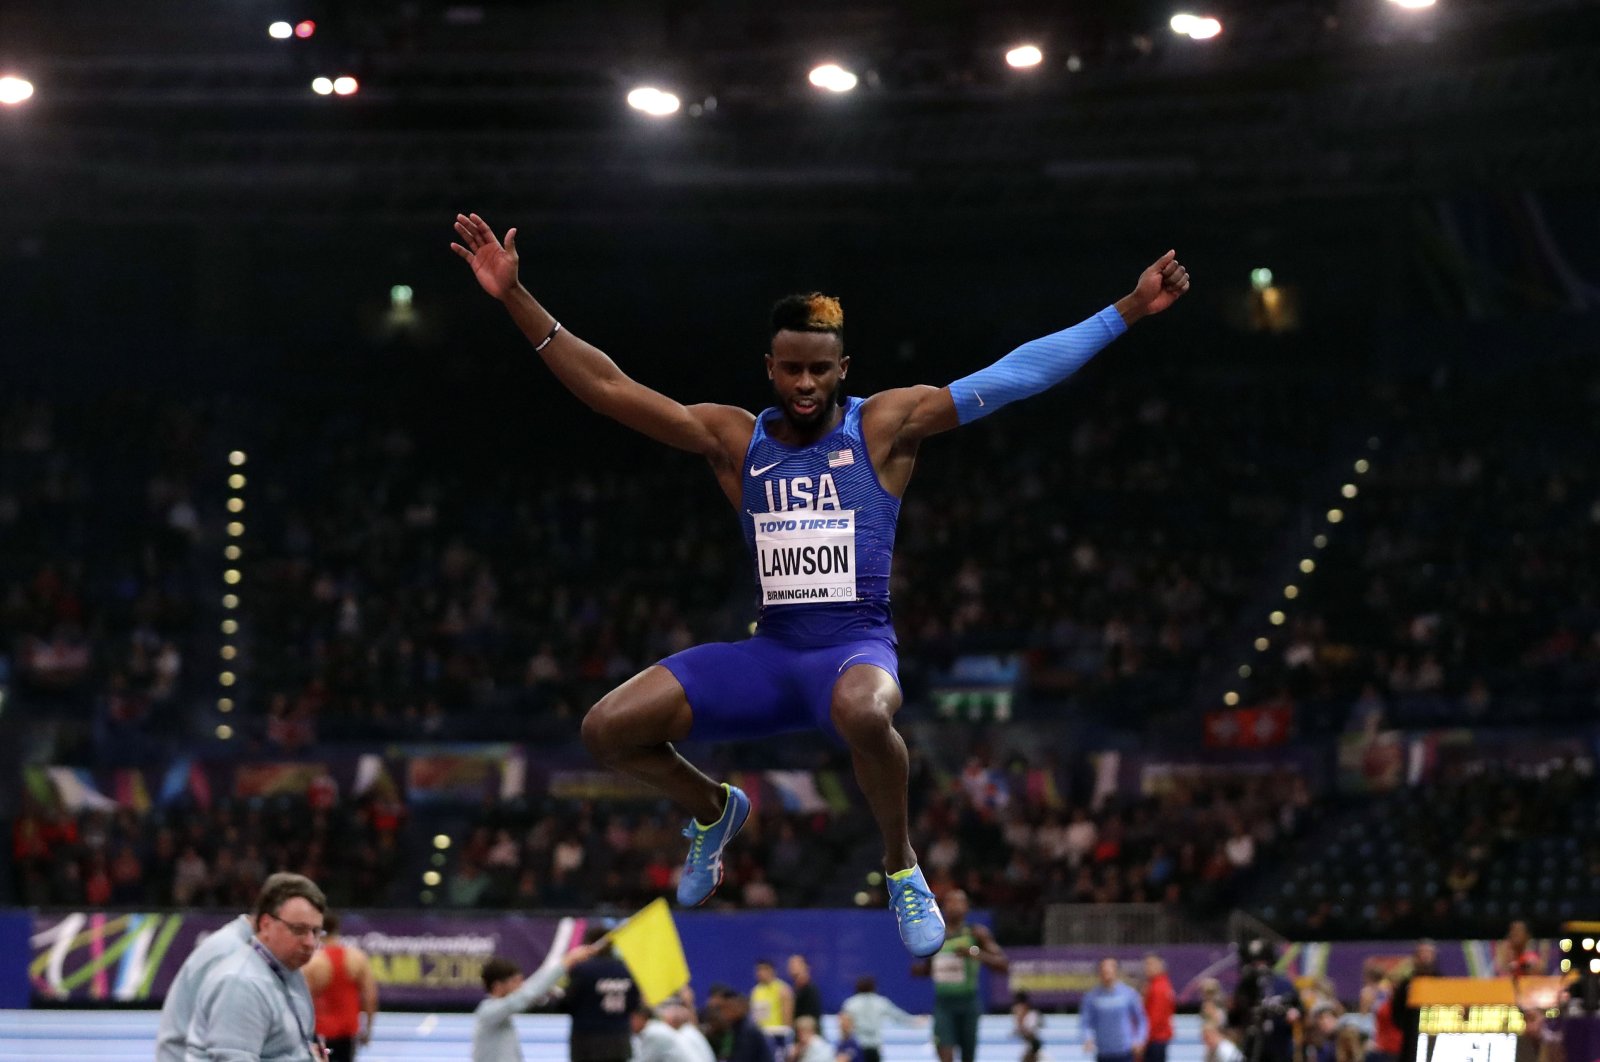 Jarrion Lawson makes an attempt in the men's long jump final, Birmingham, United Kingdom, Mar. 2, 2018. (AP Photo) 